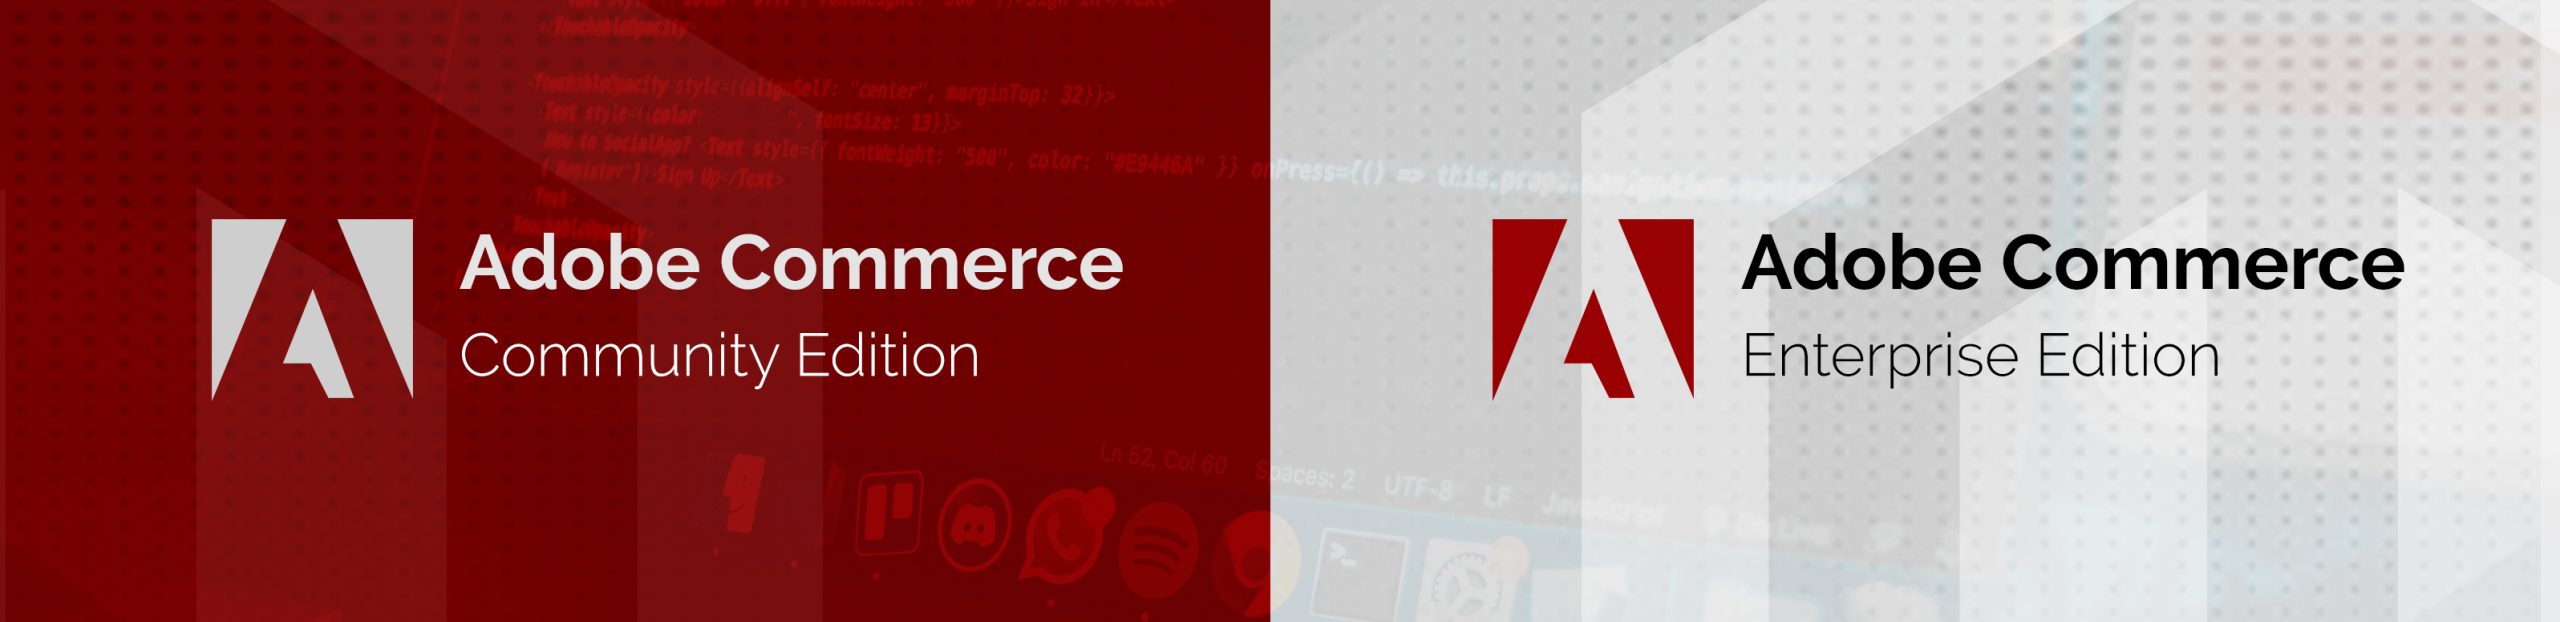 Adobe Commerce platform